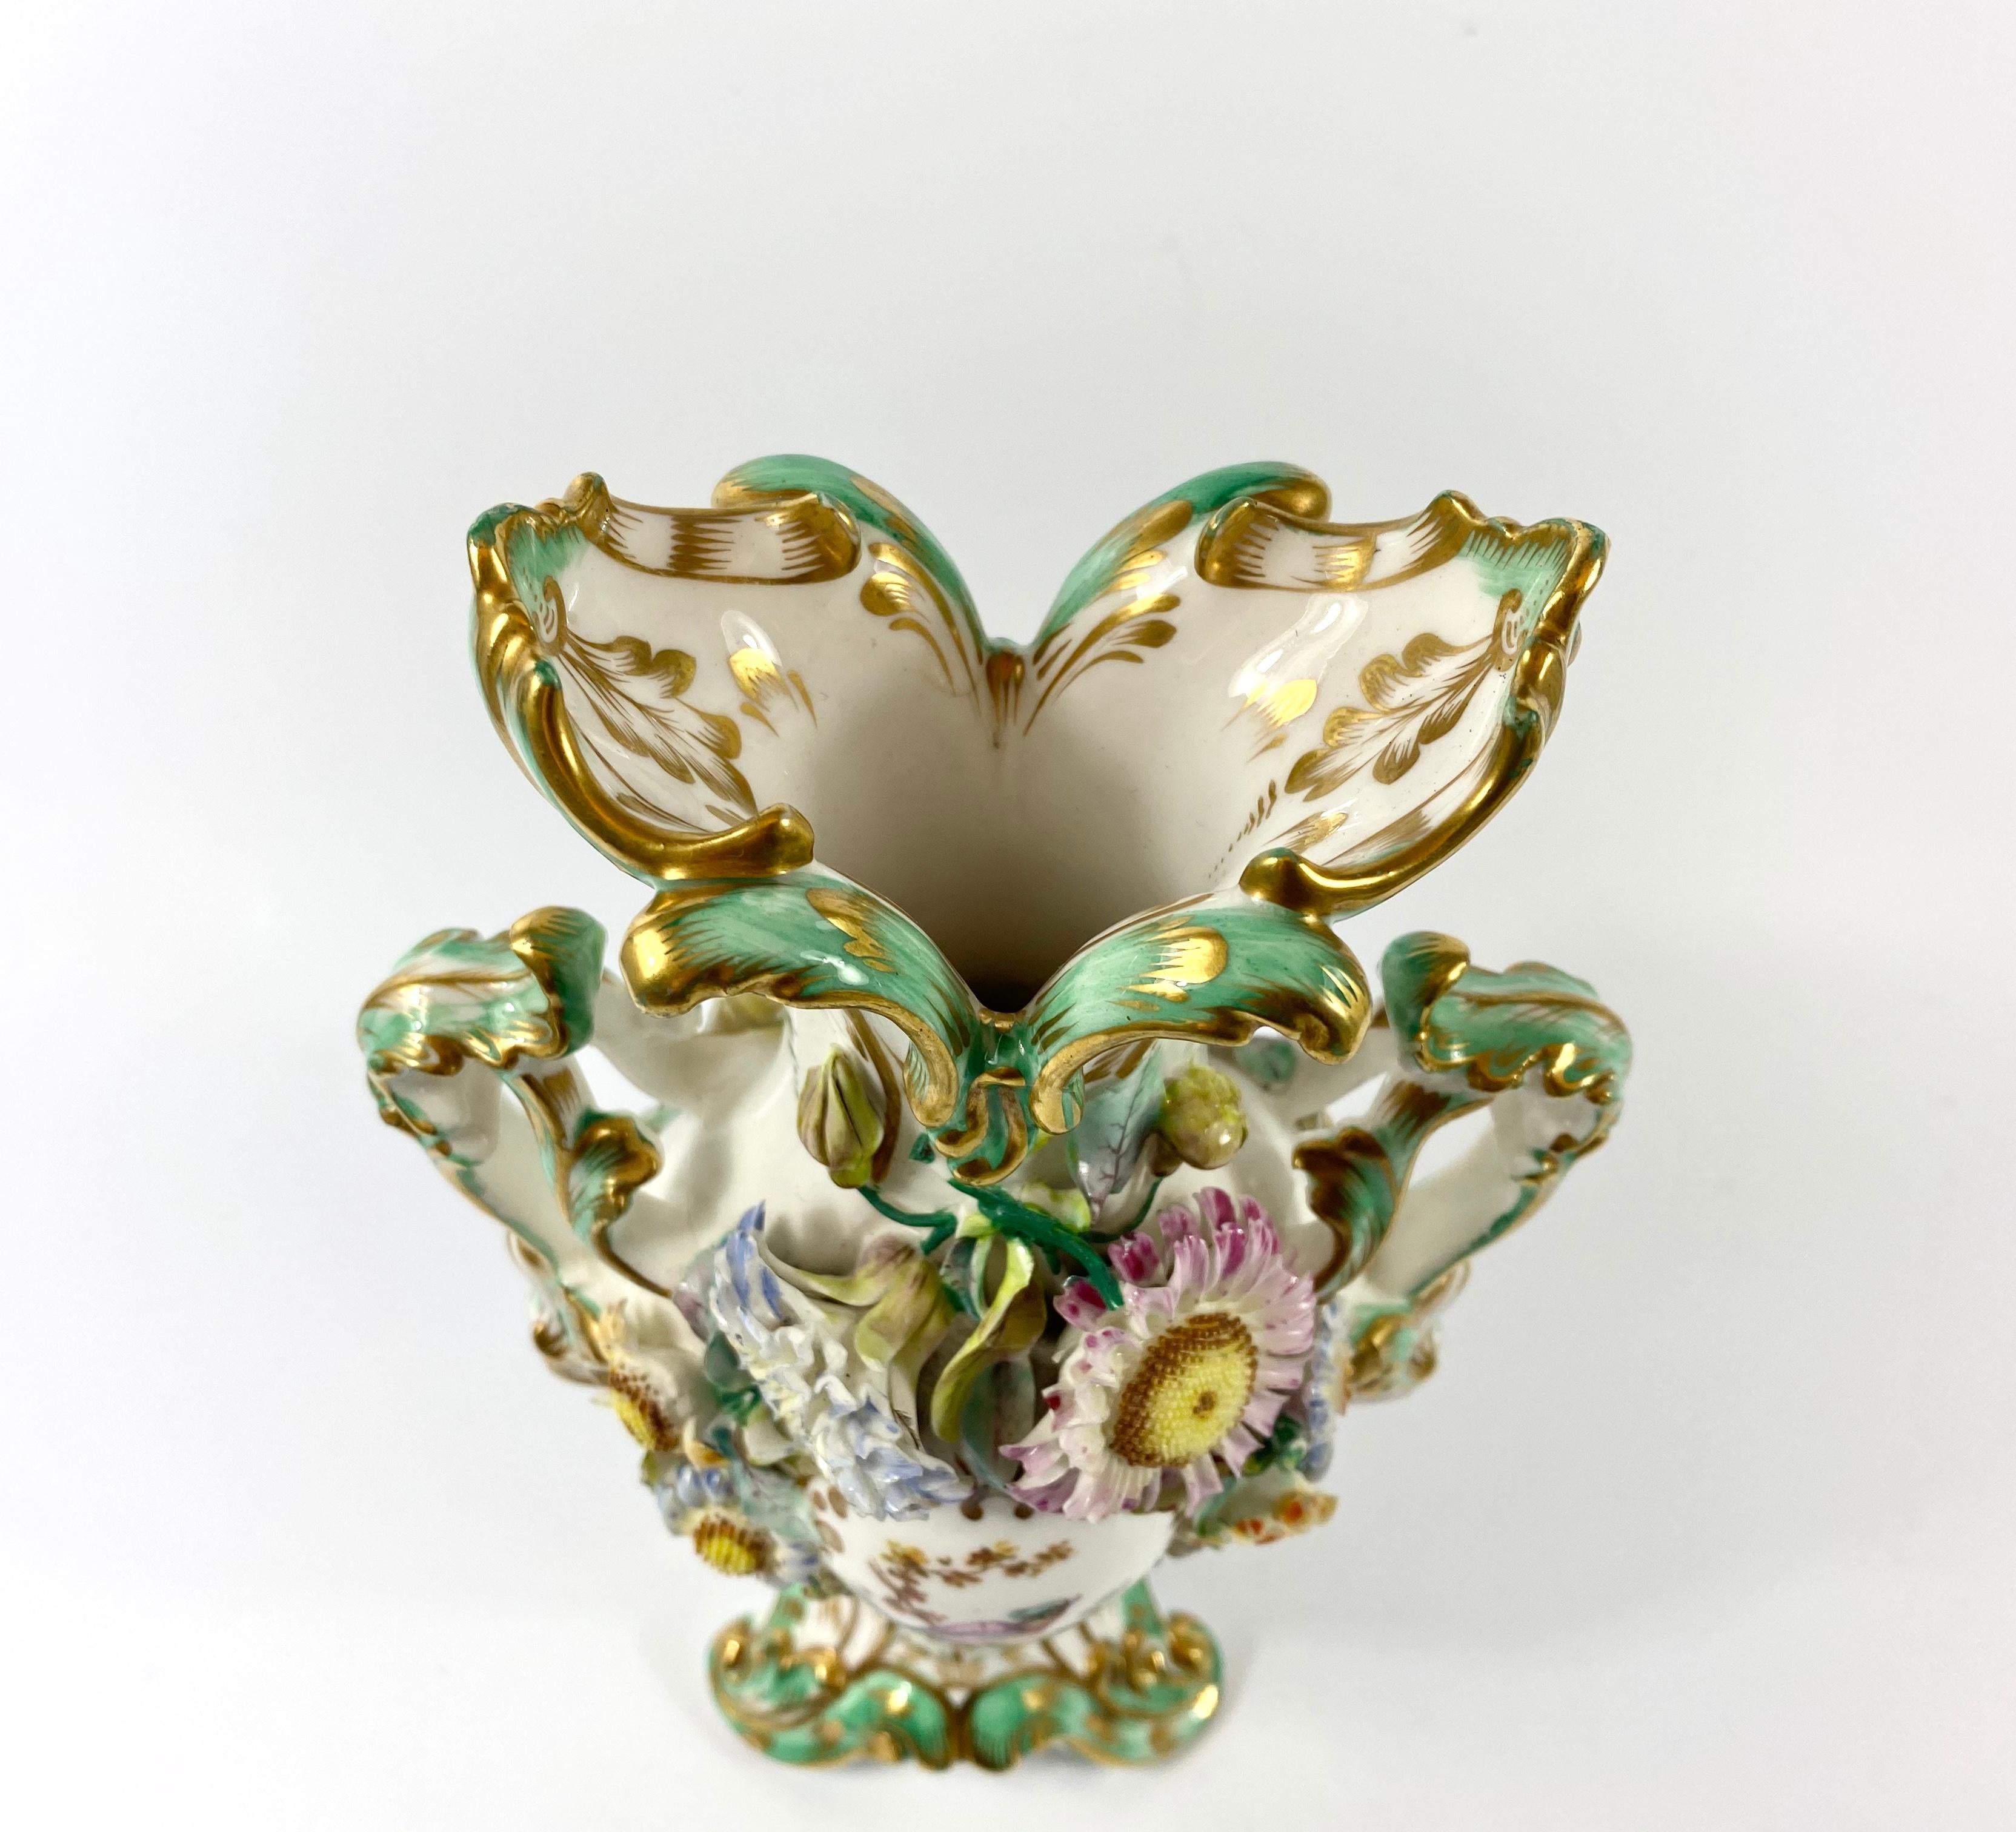 Fired Pair of Coalbrookdale Encrusted Porcelain Vases, circa 1830